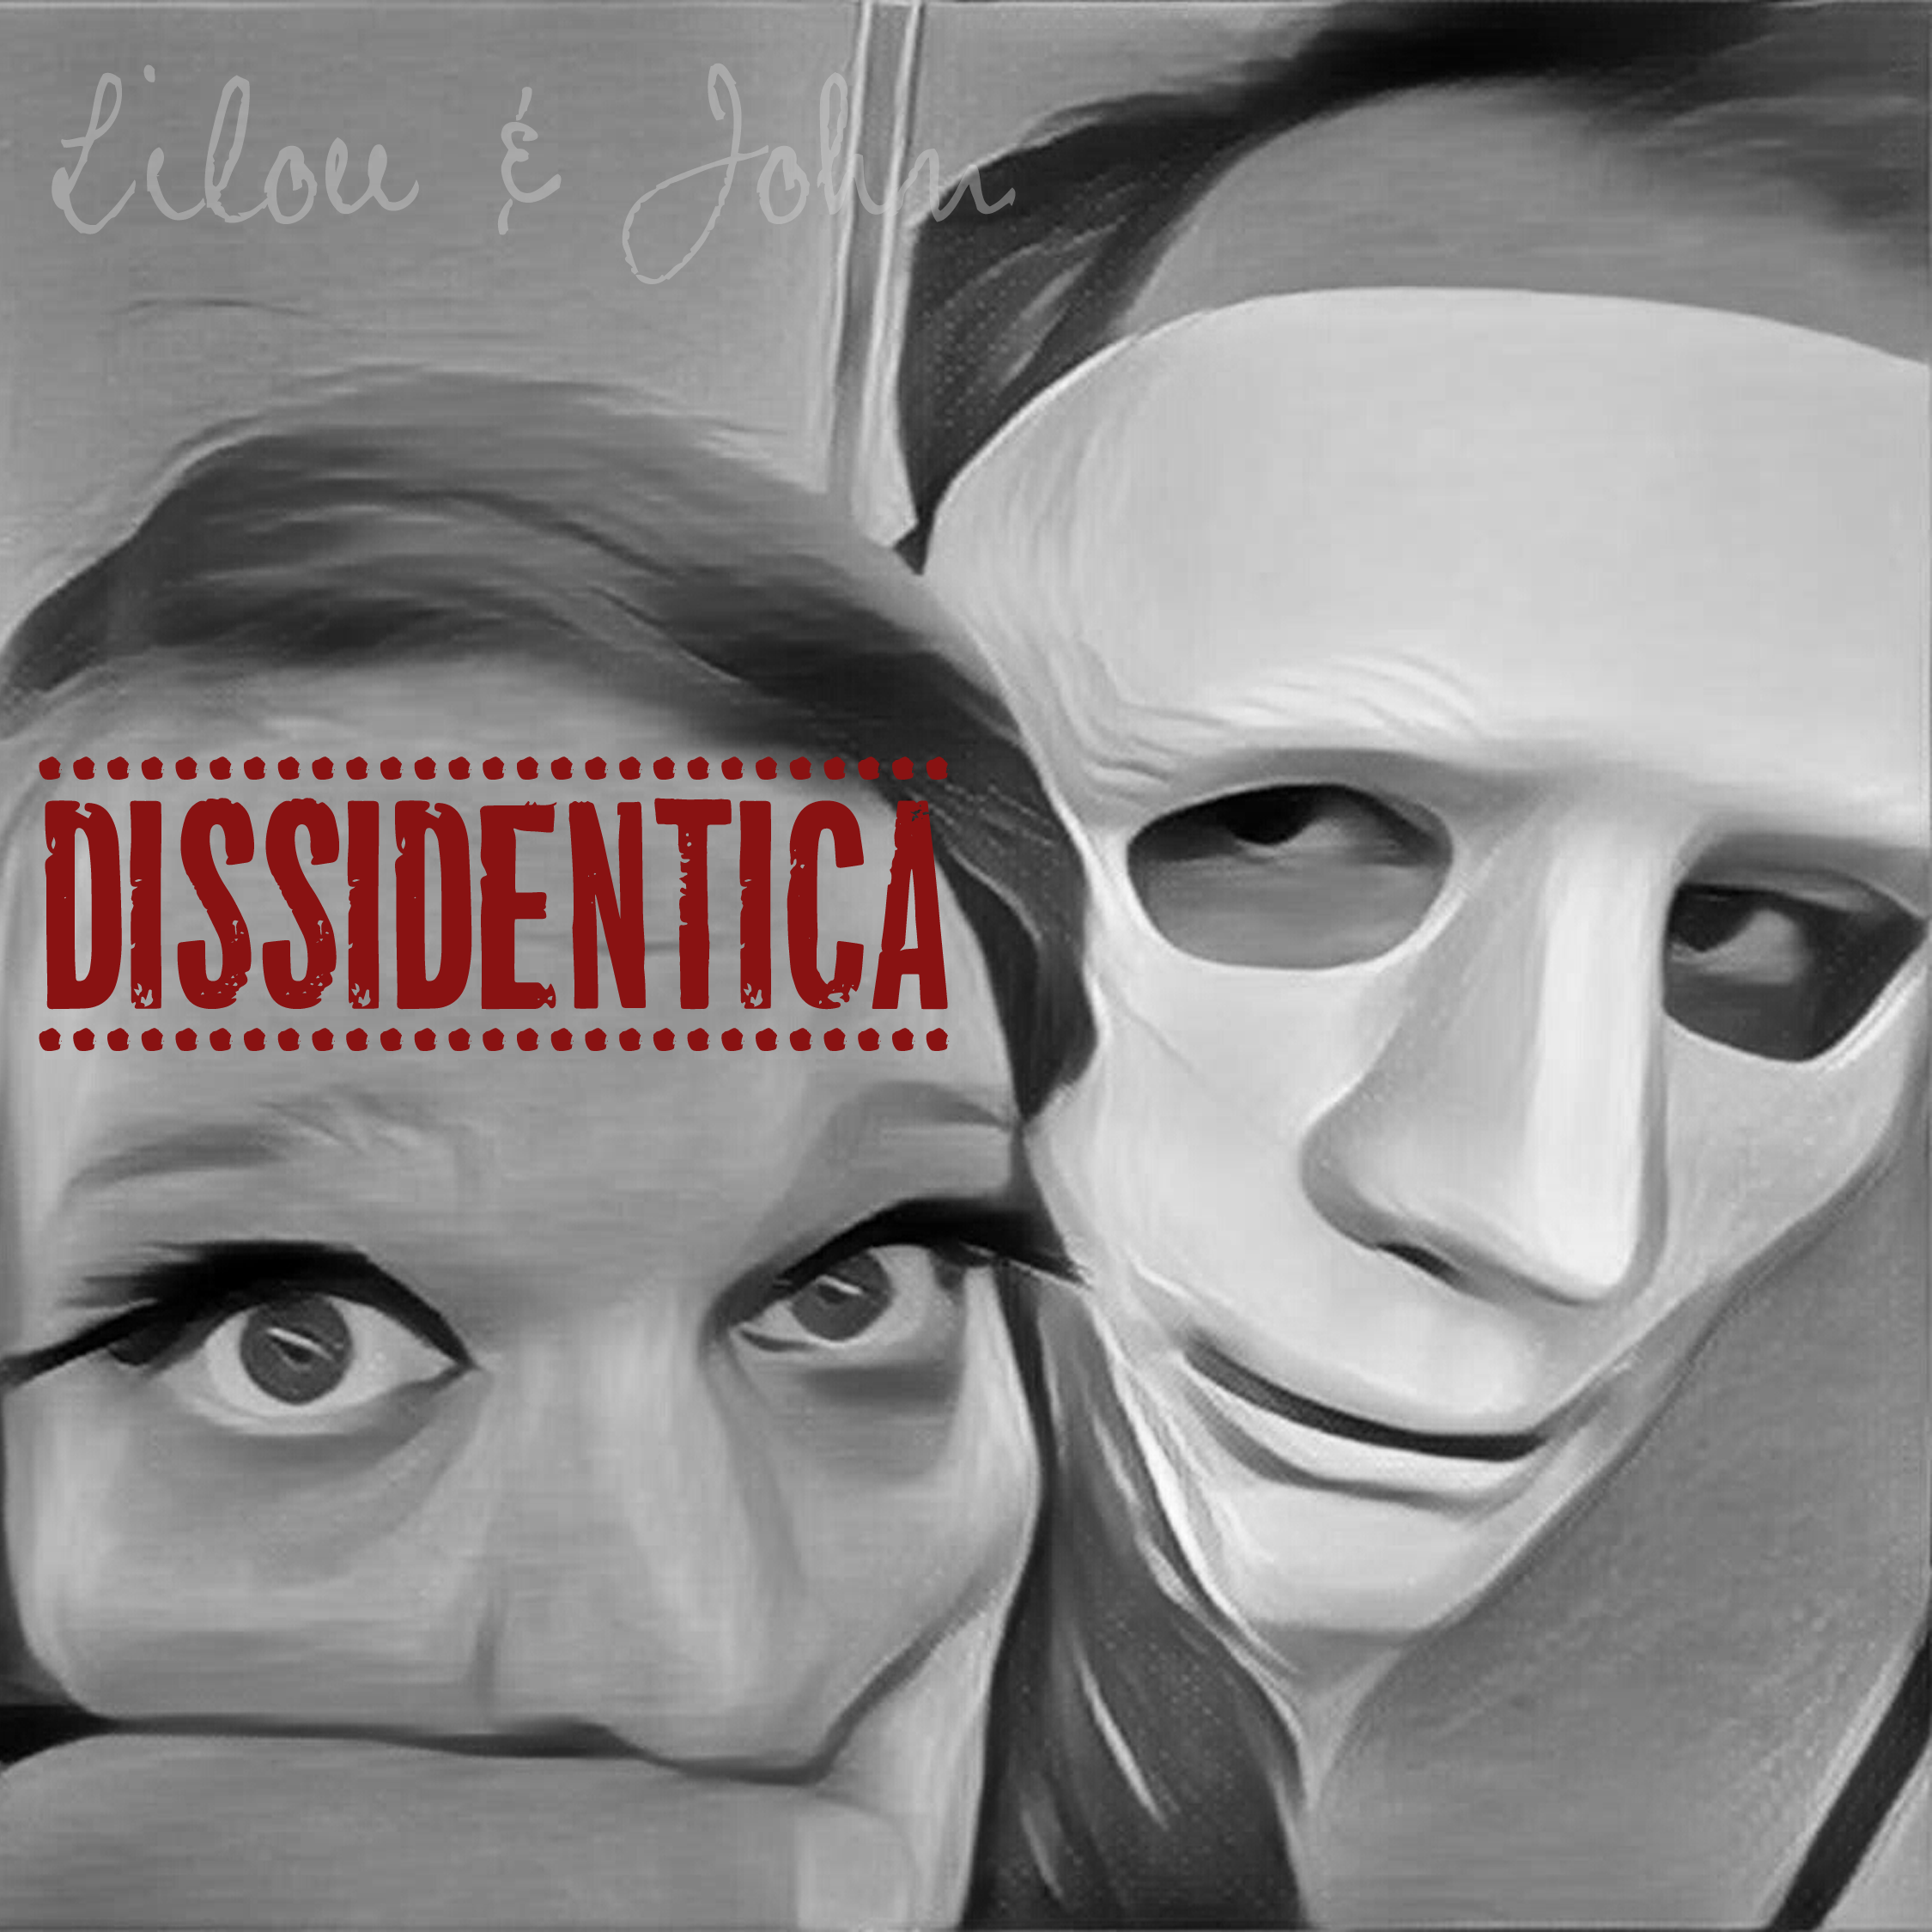 Lilou & John - Dissidentica